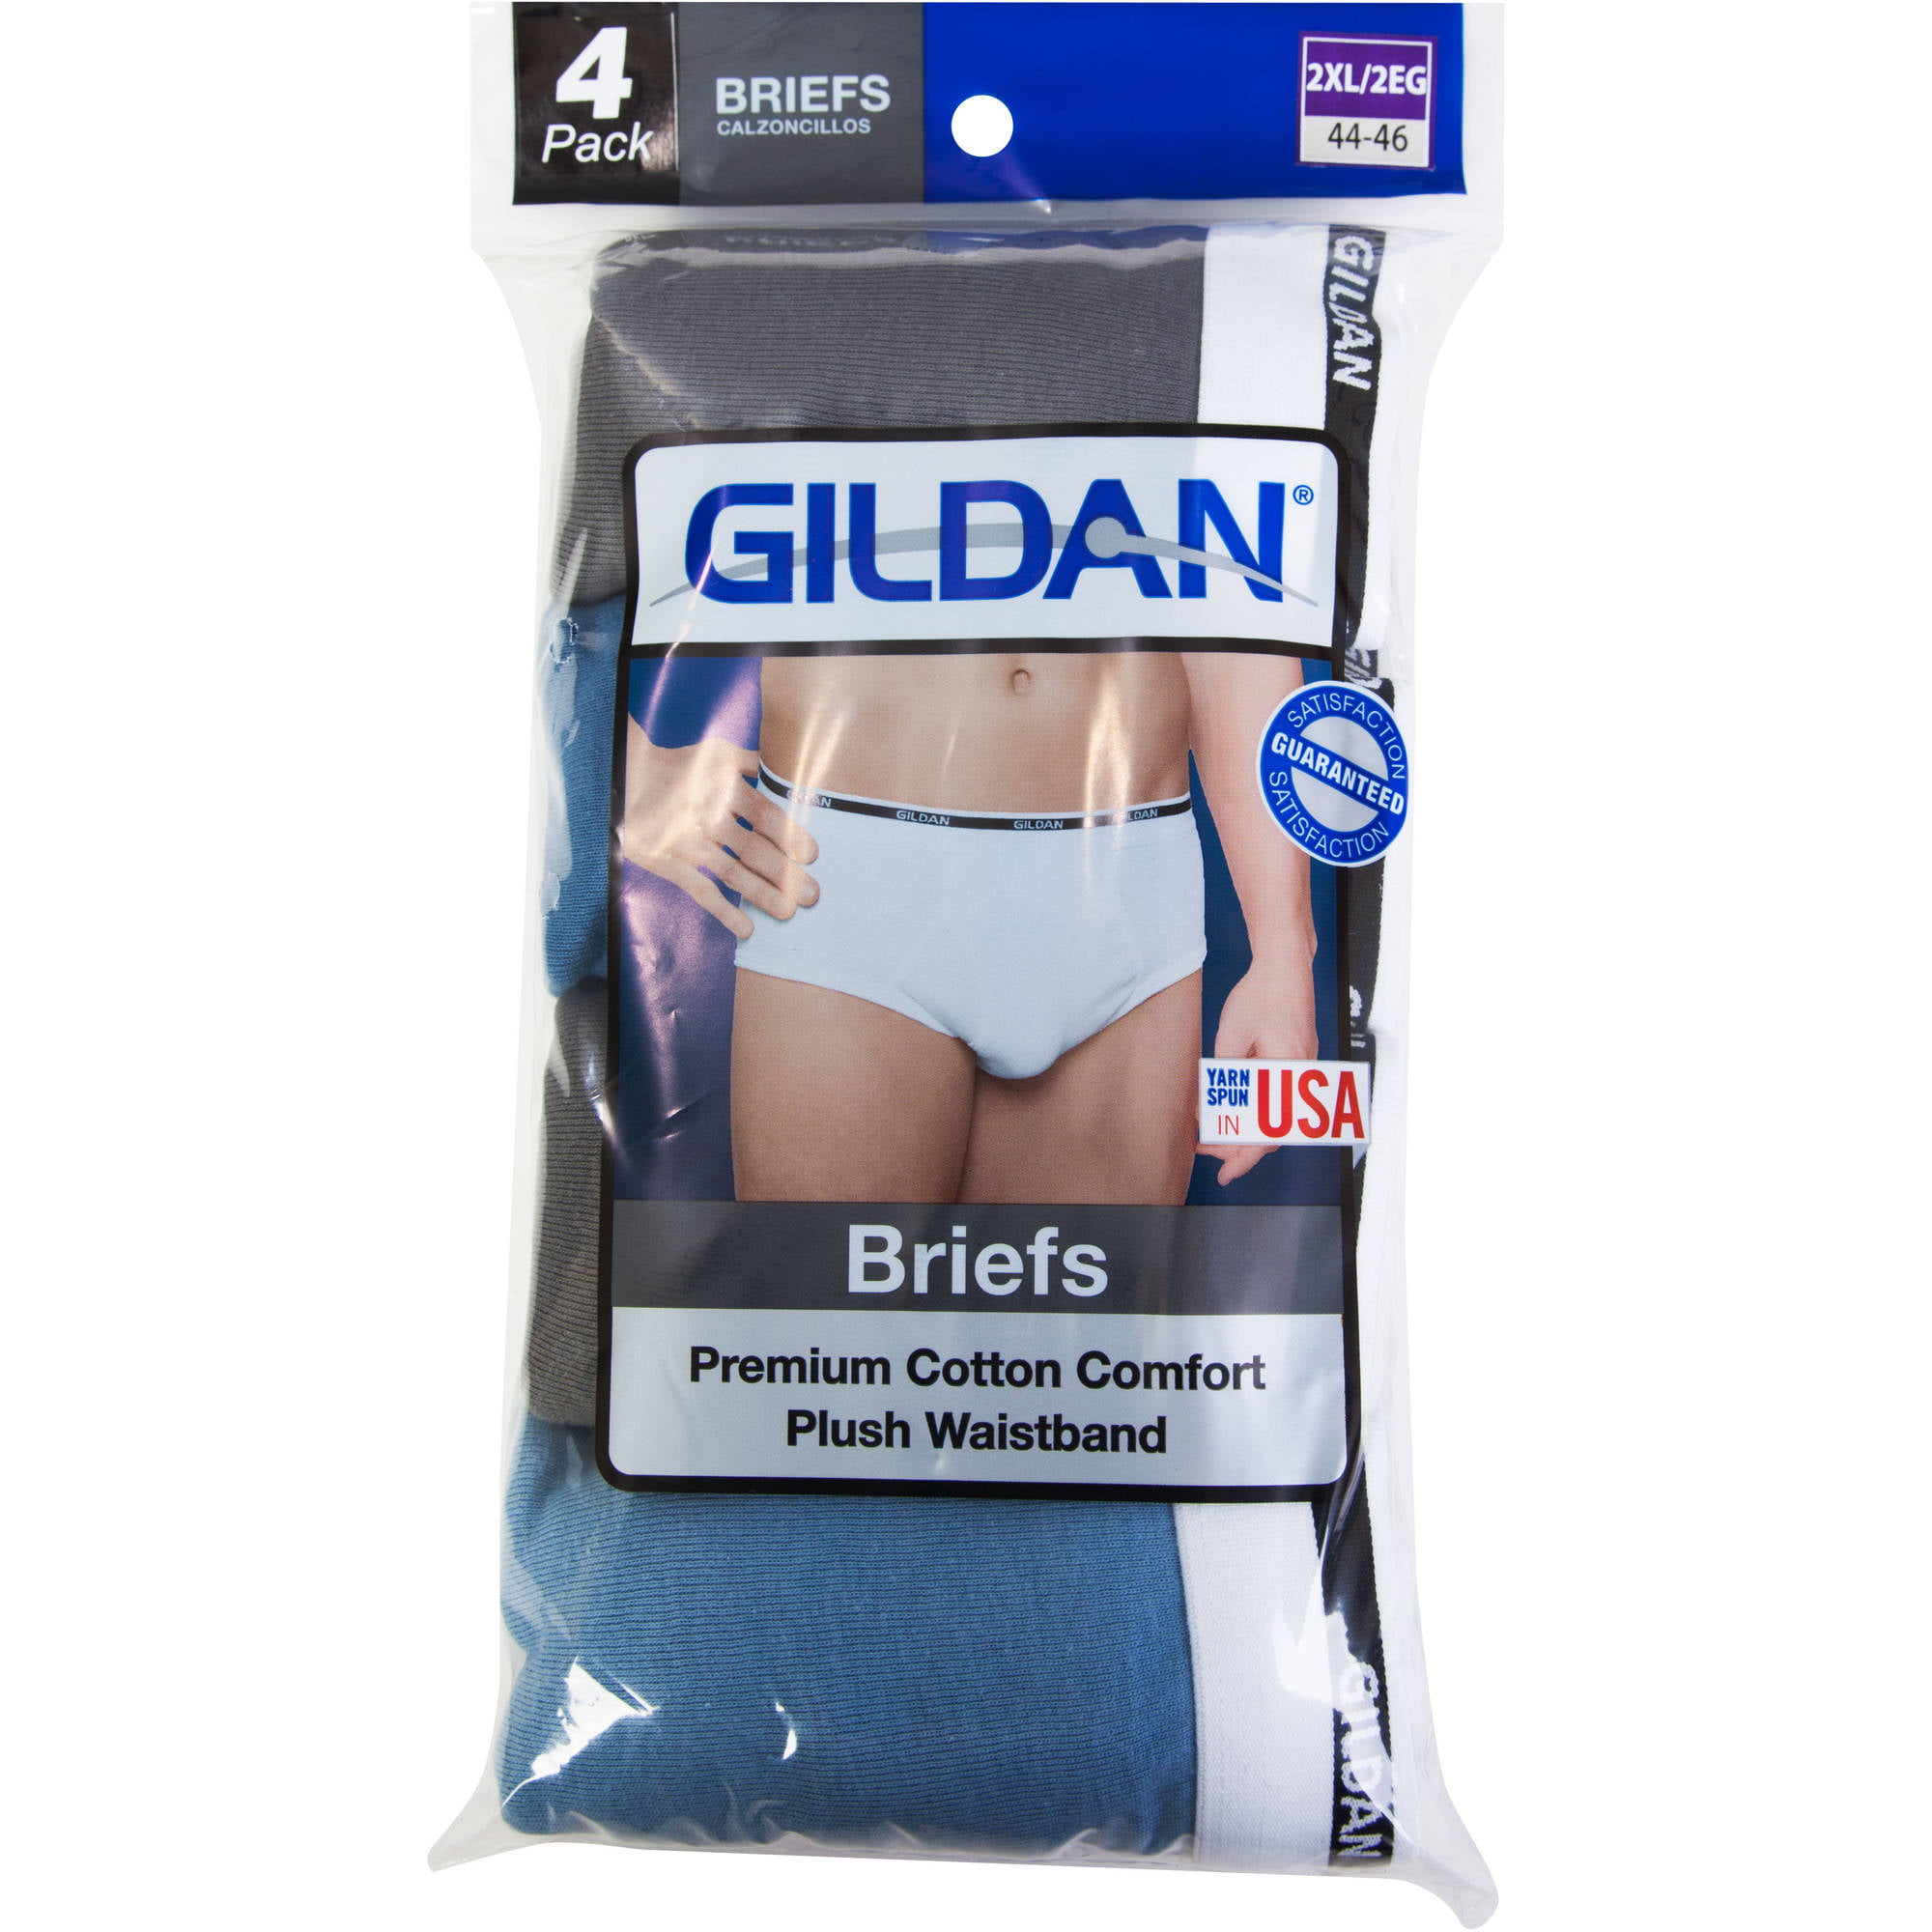 Gildan Big Men's Premium Cotton Brief, 4-Pack, 2-XL